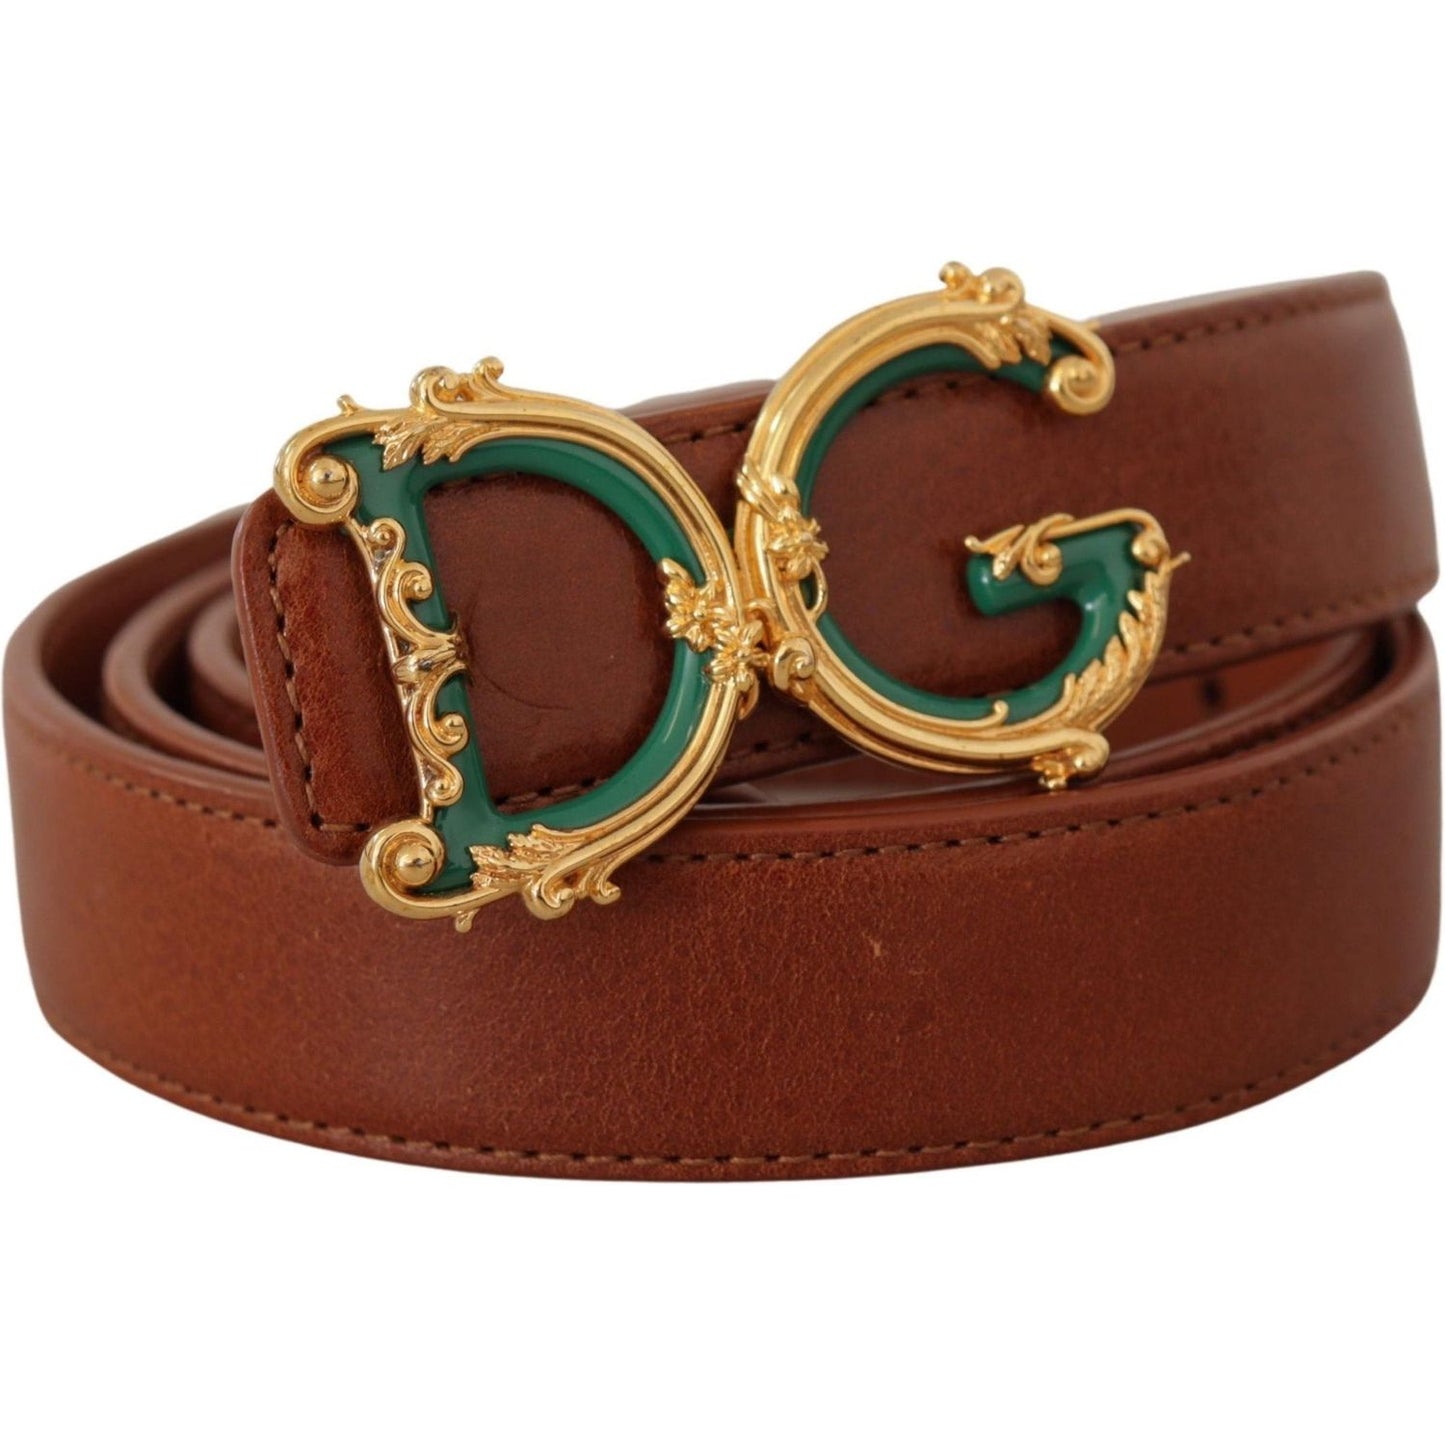 Dolce & Gabbana Elegant Leather Belt with Logo Buckle brown-leather-baroque-gold-dg-logo-waist-buckle-belt